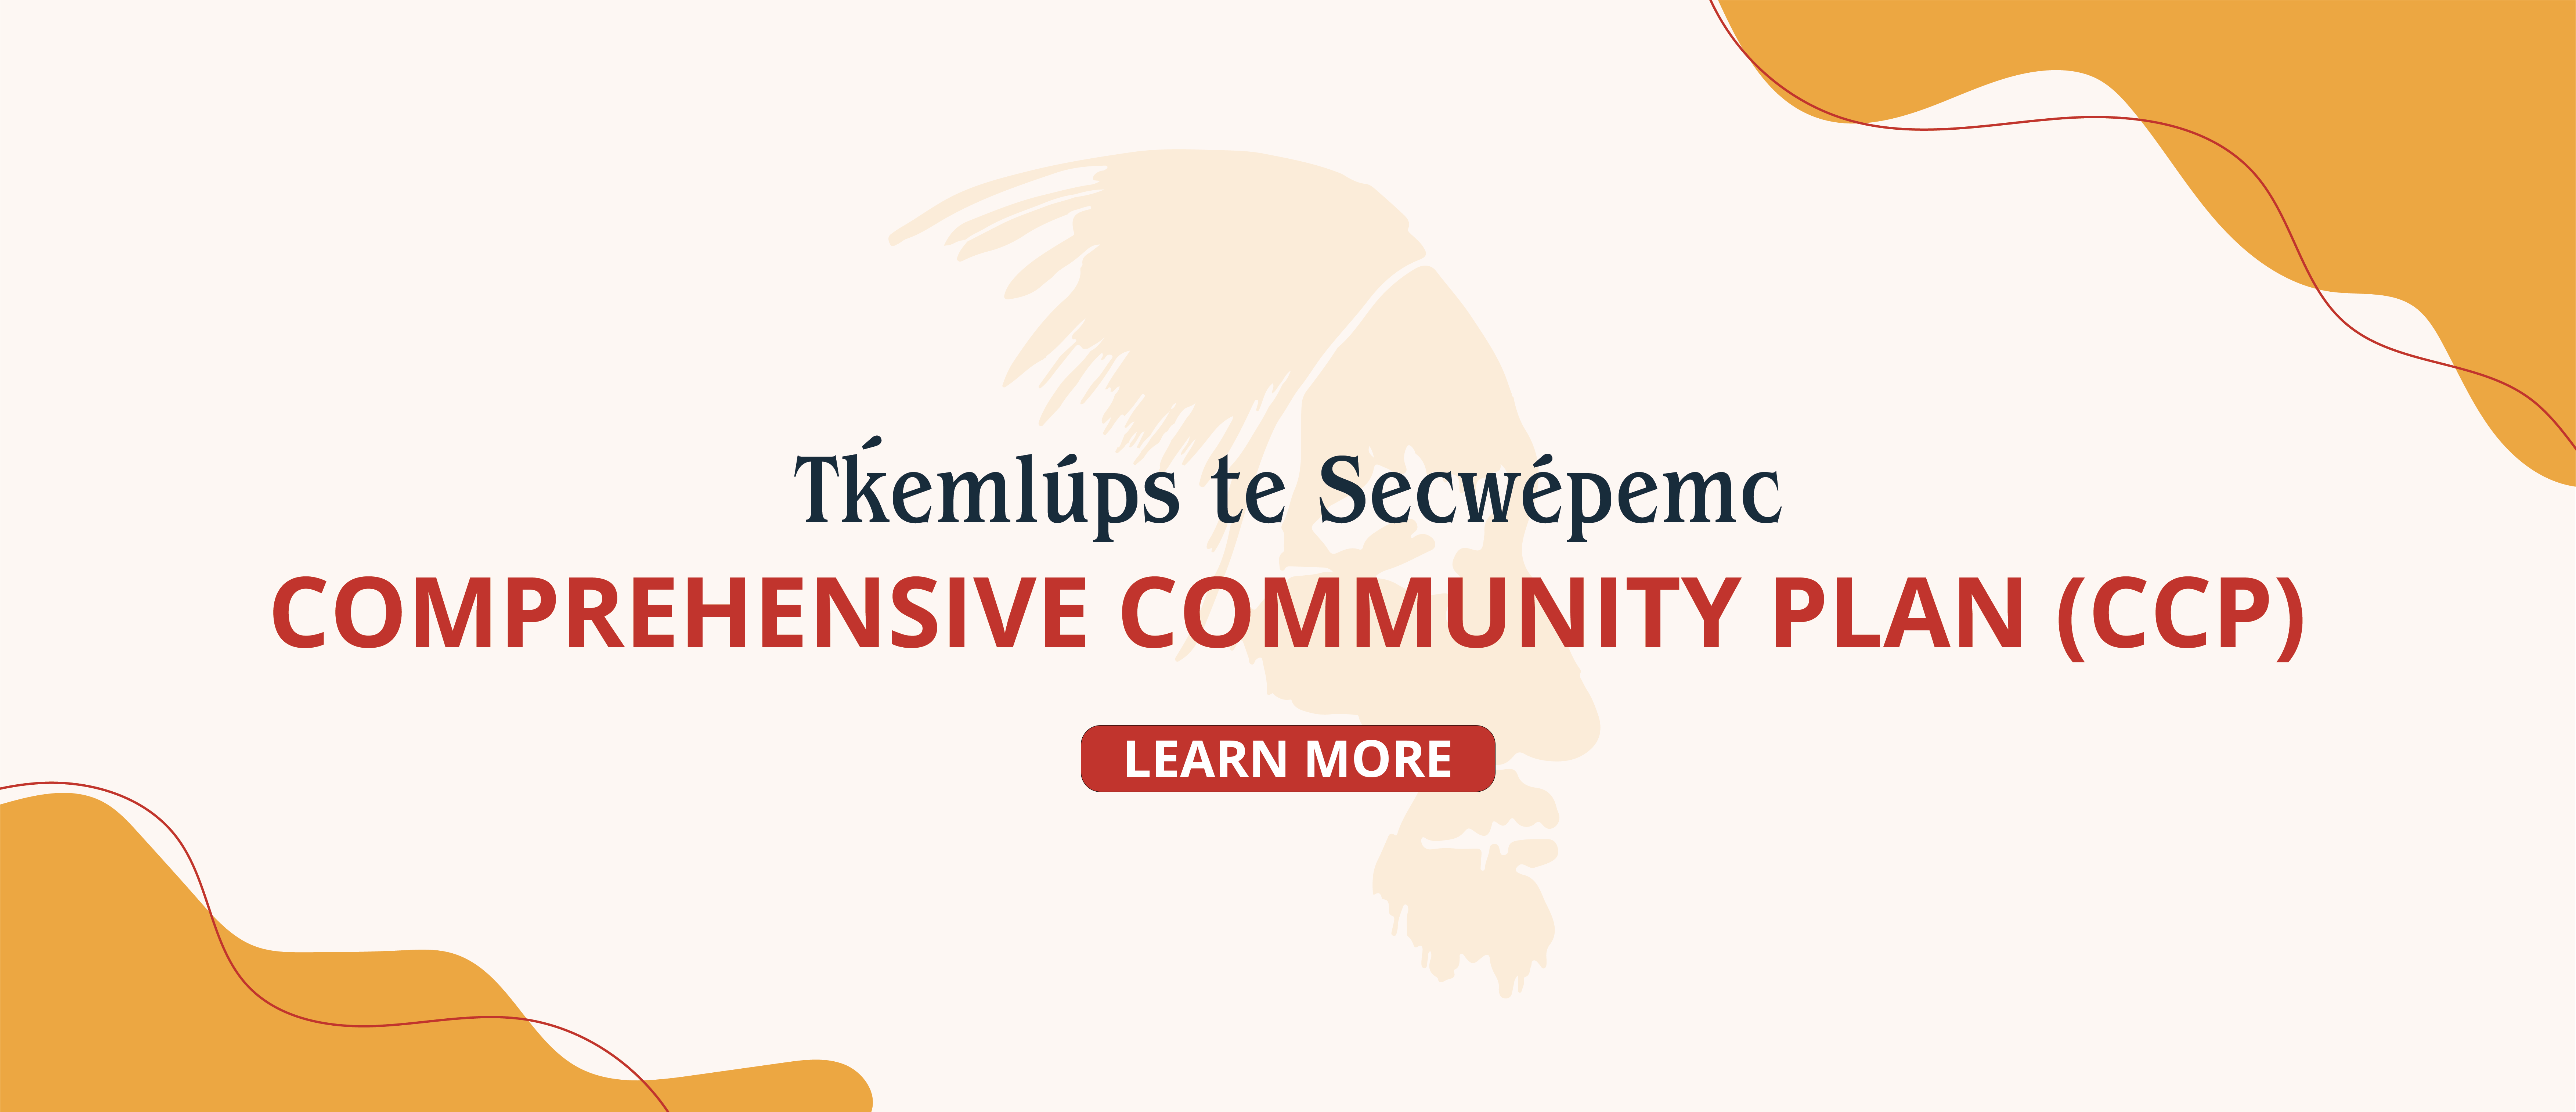 Visit the Tk̓emlúps te Secwépemc Comprehensive Community Plan web page